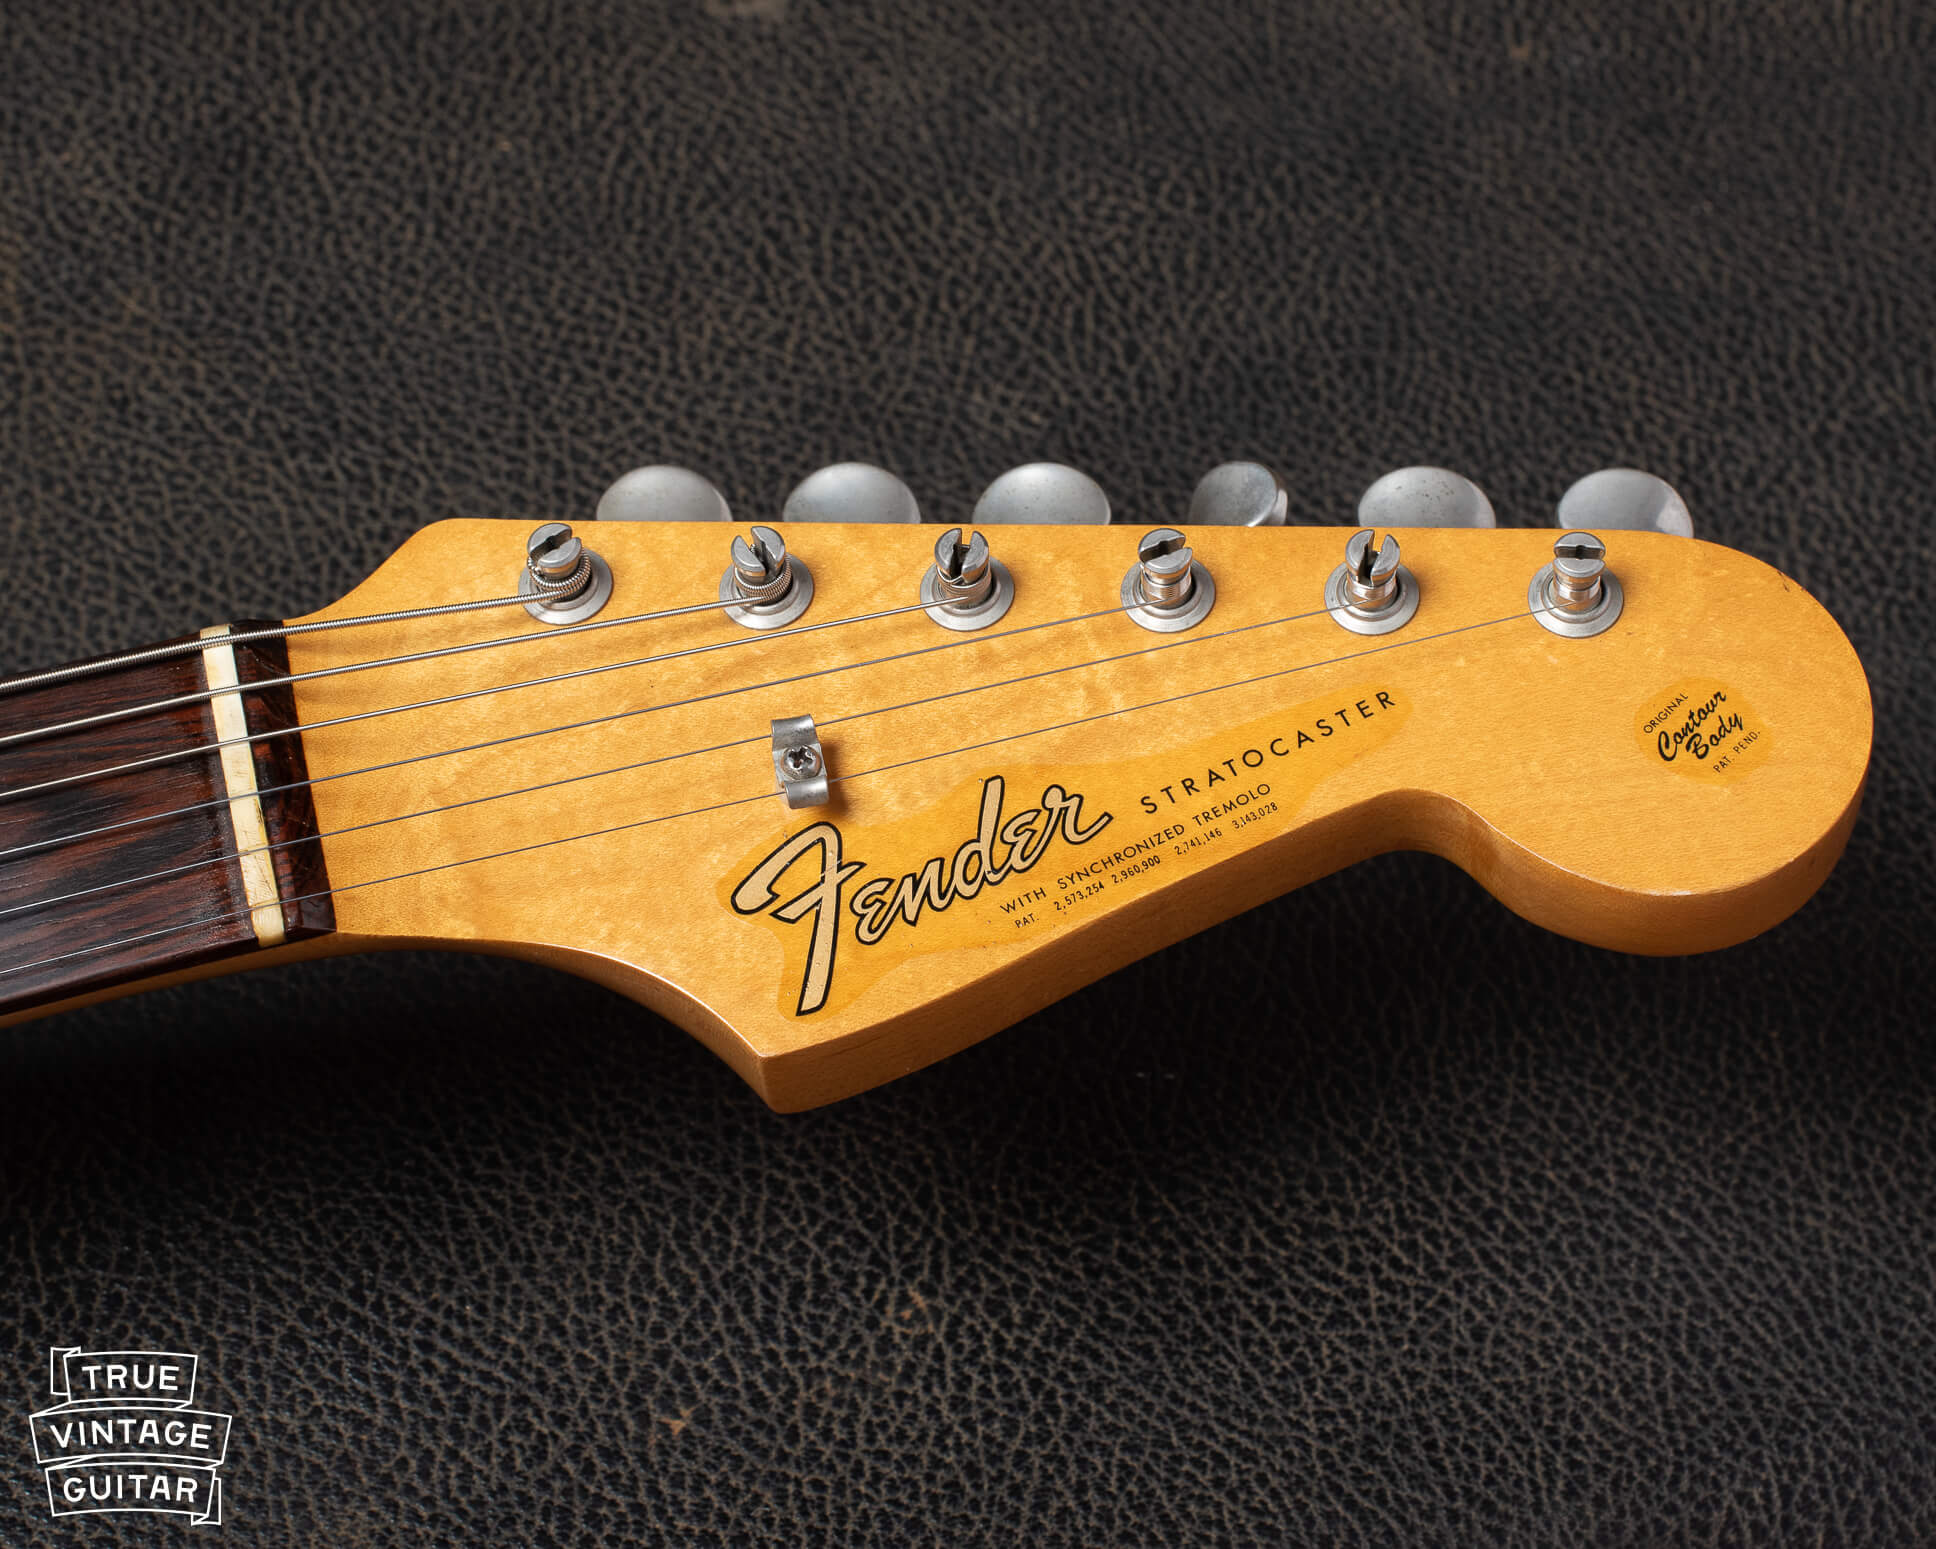 Vintage Fender Stratocaster pricing and value